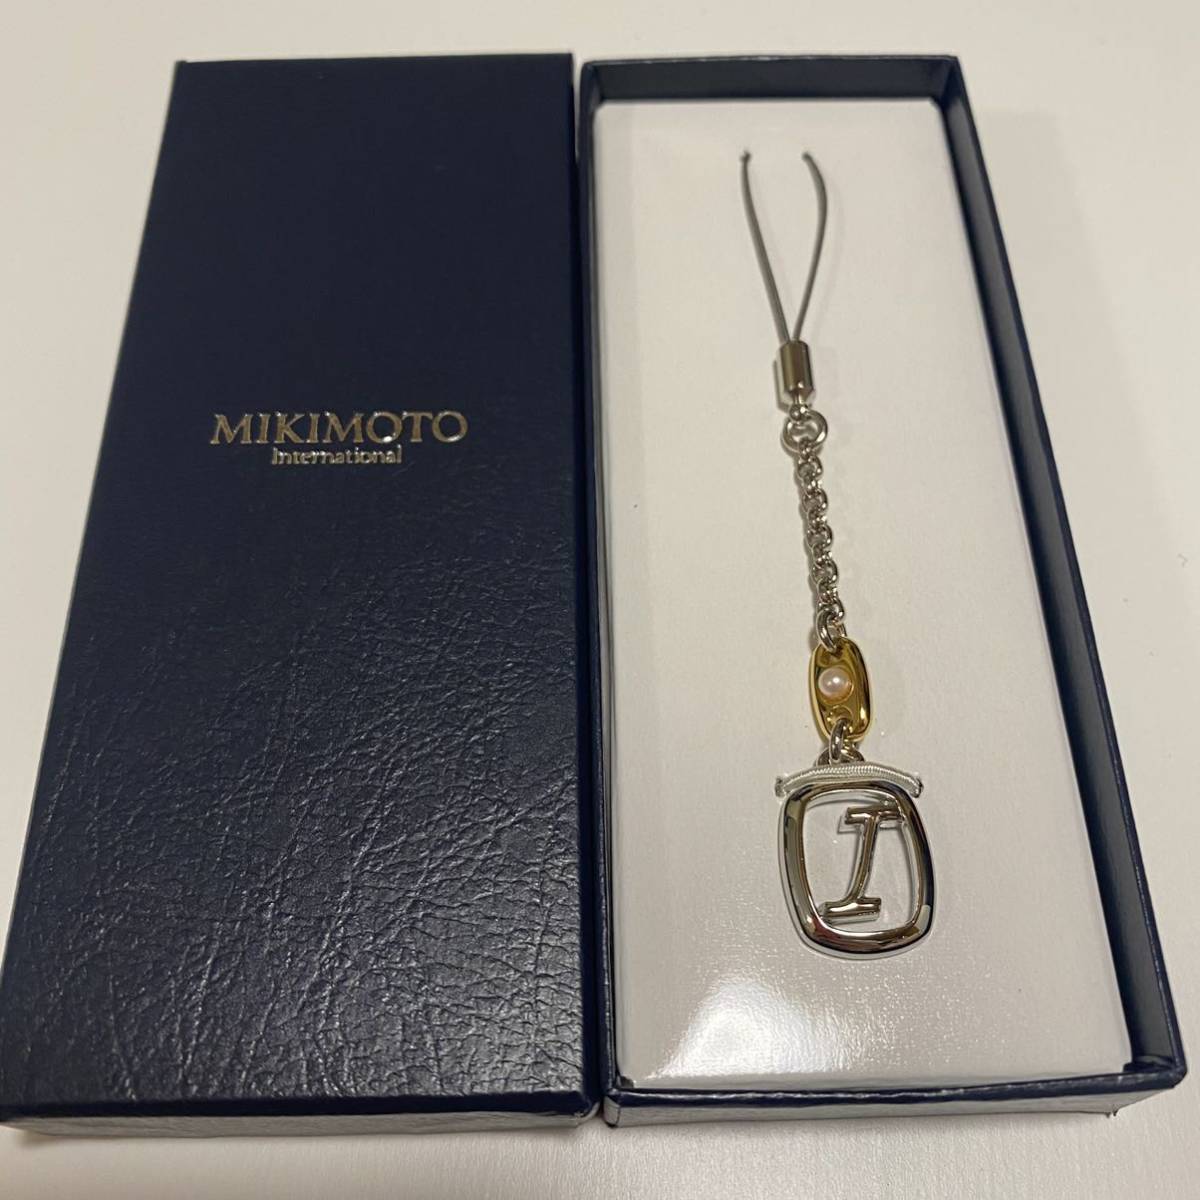  не использовался MIKIMOTO Mikimoto initial брелок для ключа I ремешок Mikimoto жемчуг 